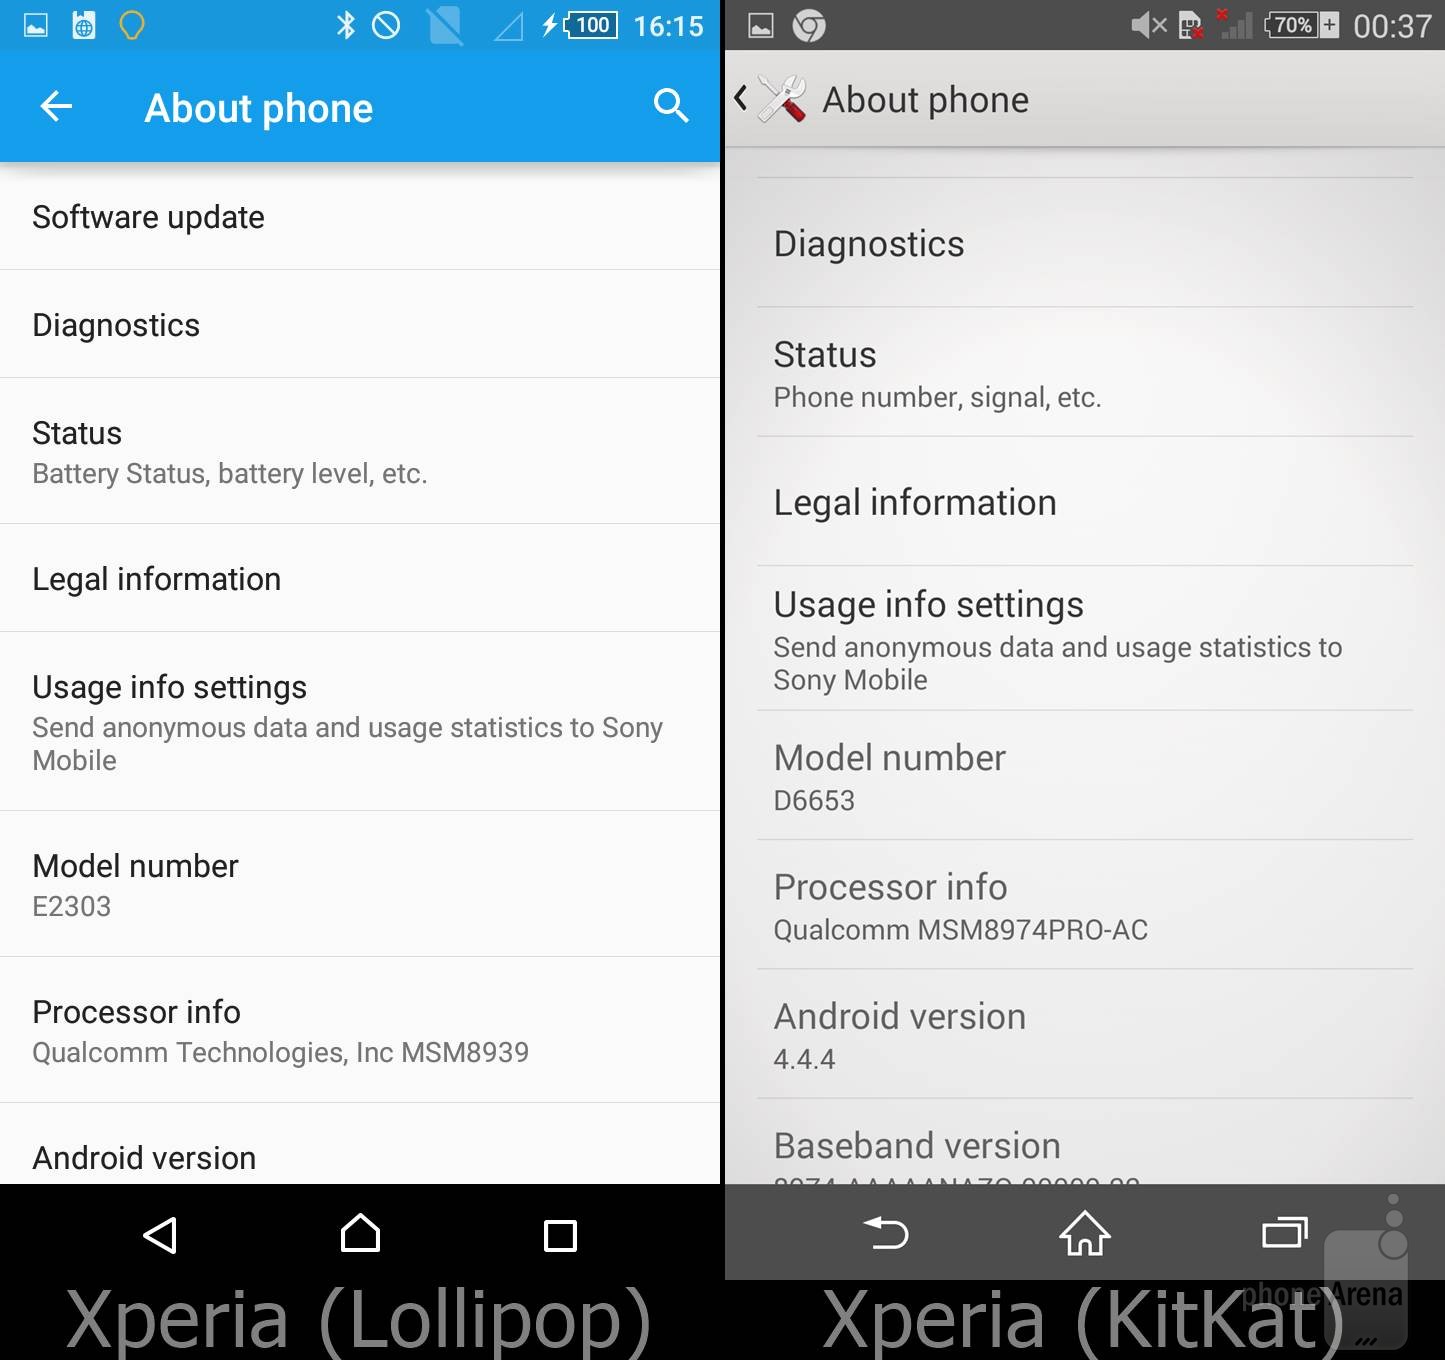 Xperia Lollipop vs Xperia KitKat UI Comparison 3